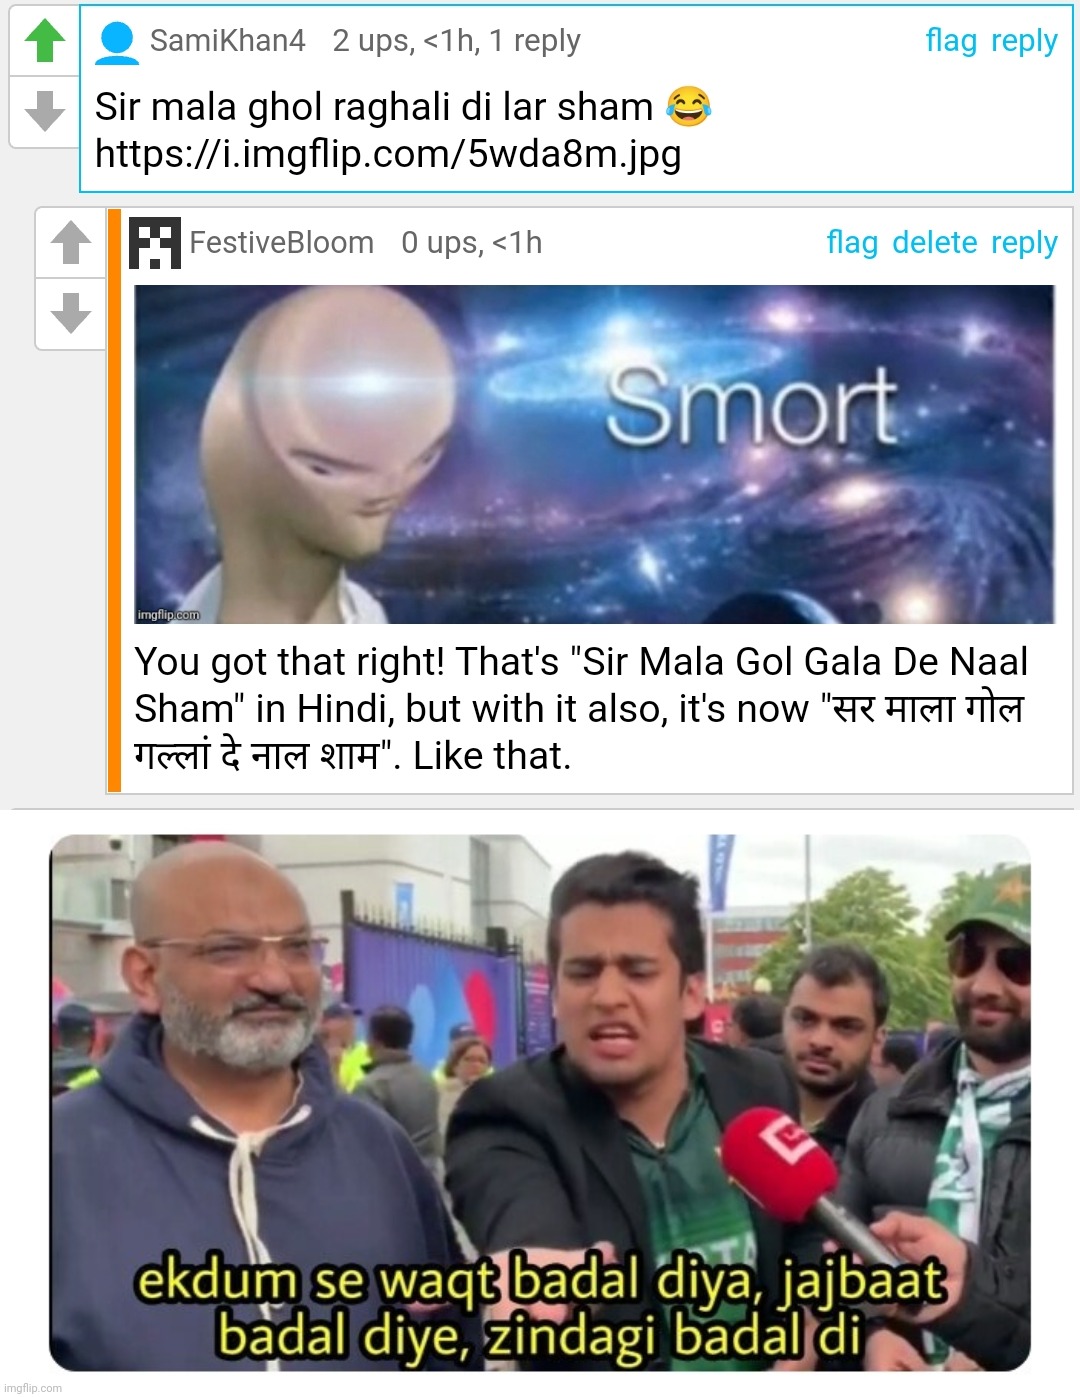 Hindi Moment | image tagged in pakistani fan - wakt badal diya zindag badal di,hindi,multilingual | made w/ Imgflip meme maker